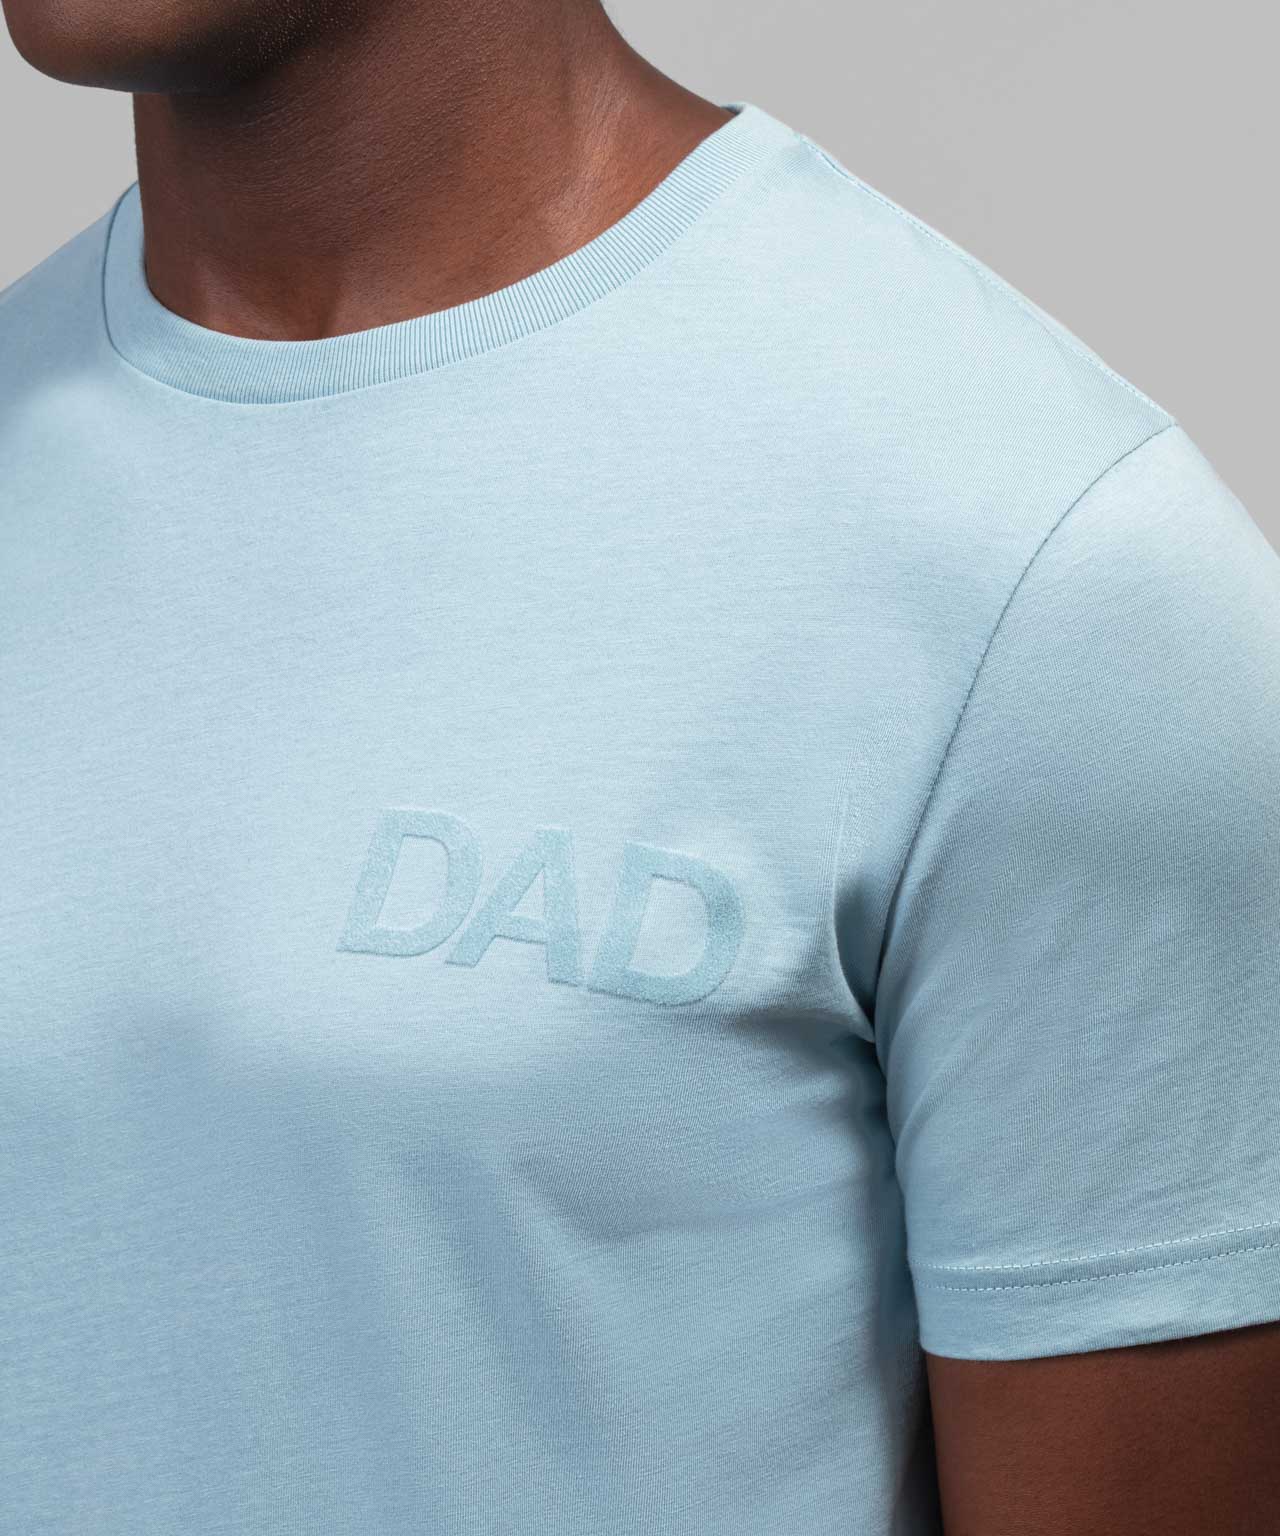 Organic Cotton T-Shirt DAD: Morning Blue